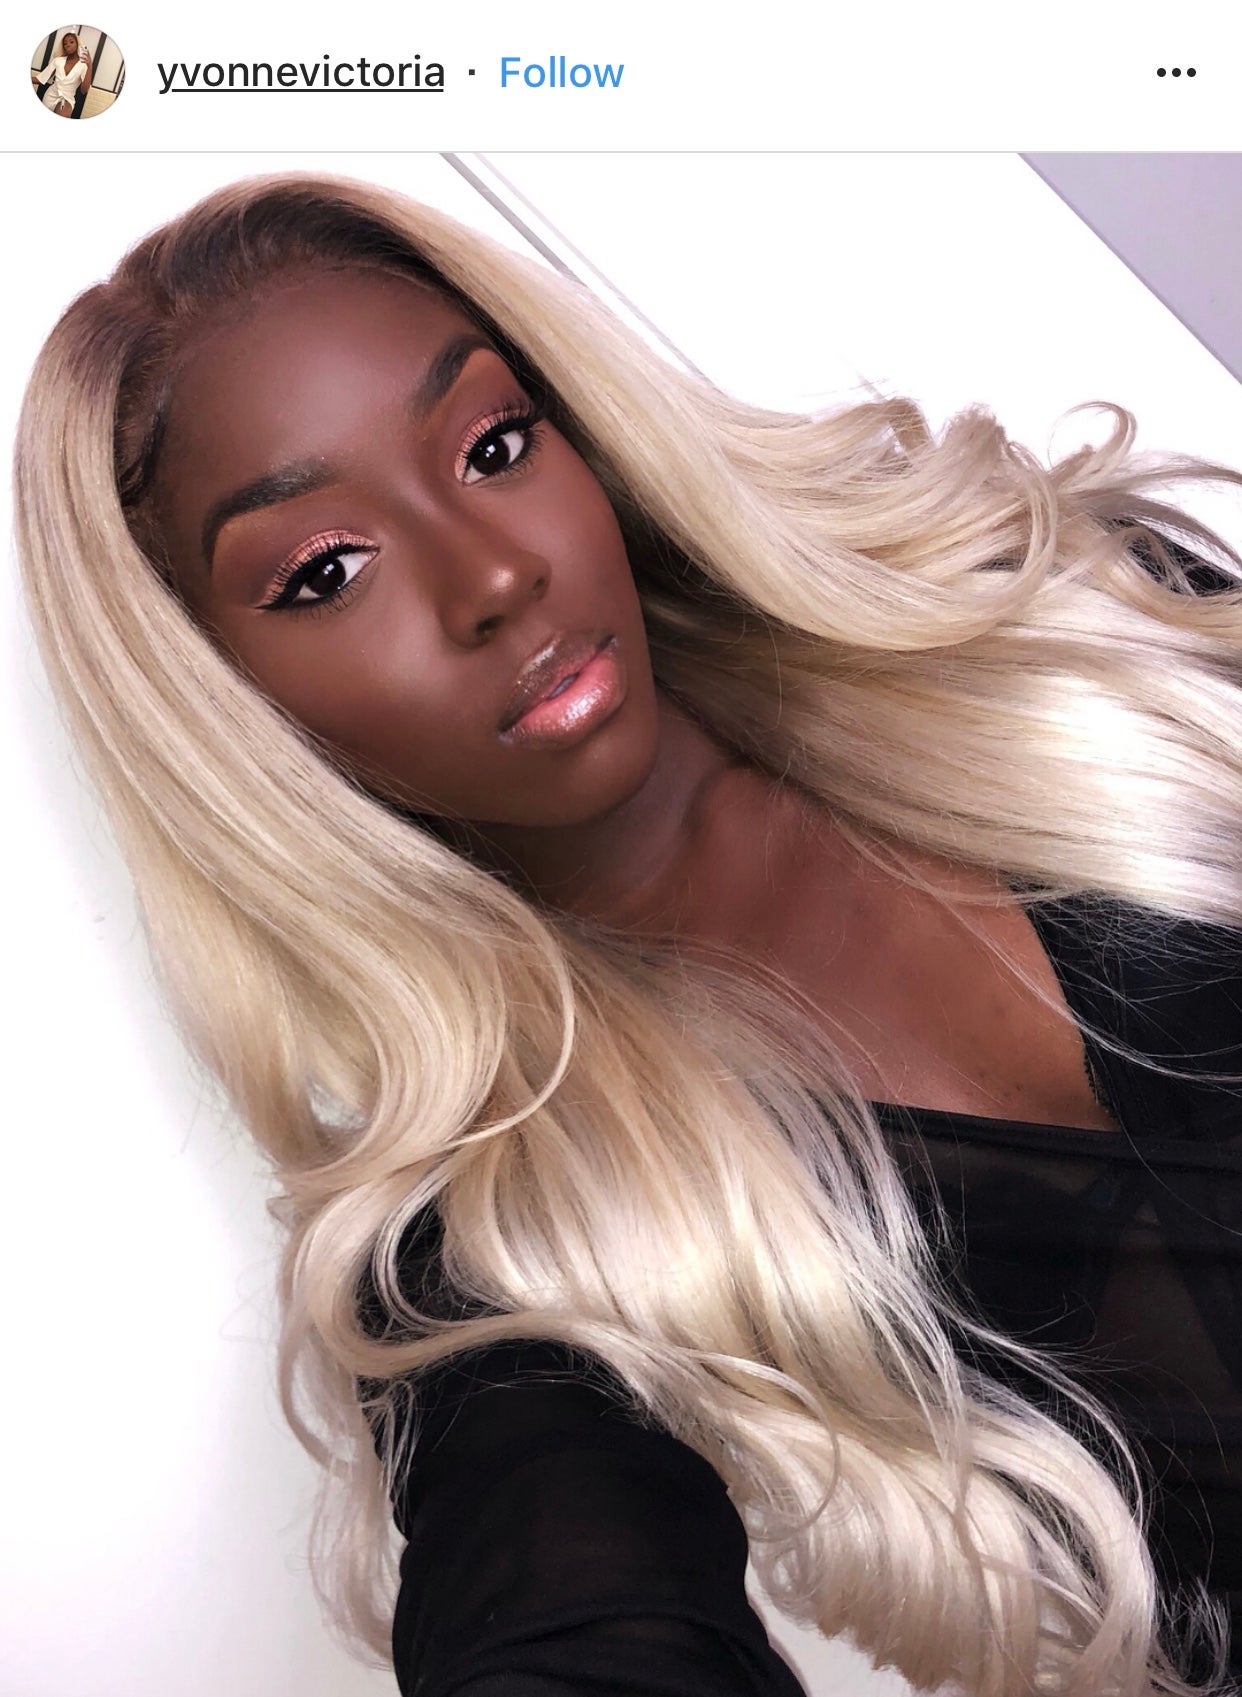 Blacks on blondes updates